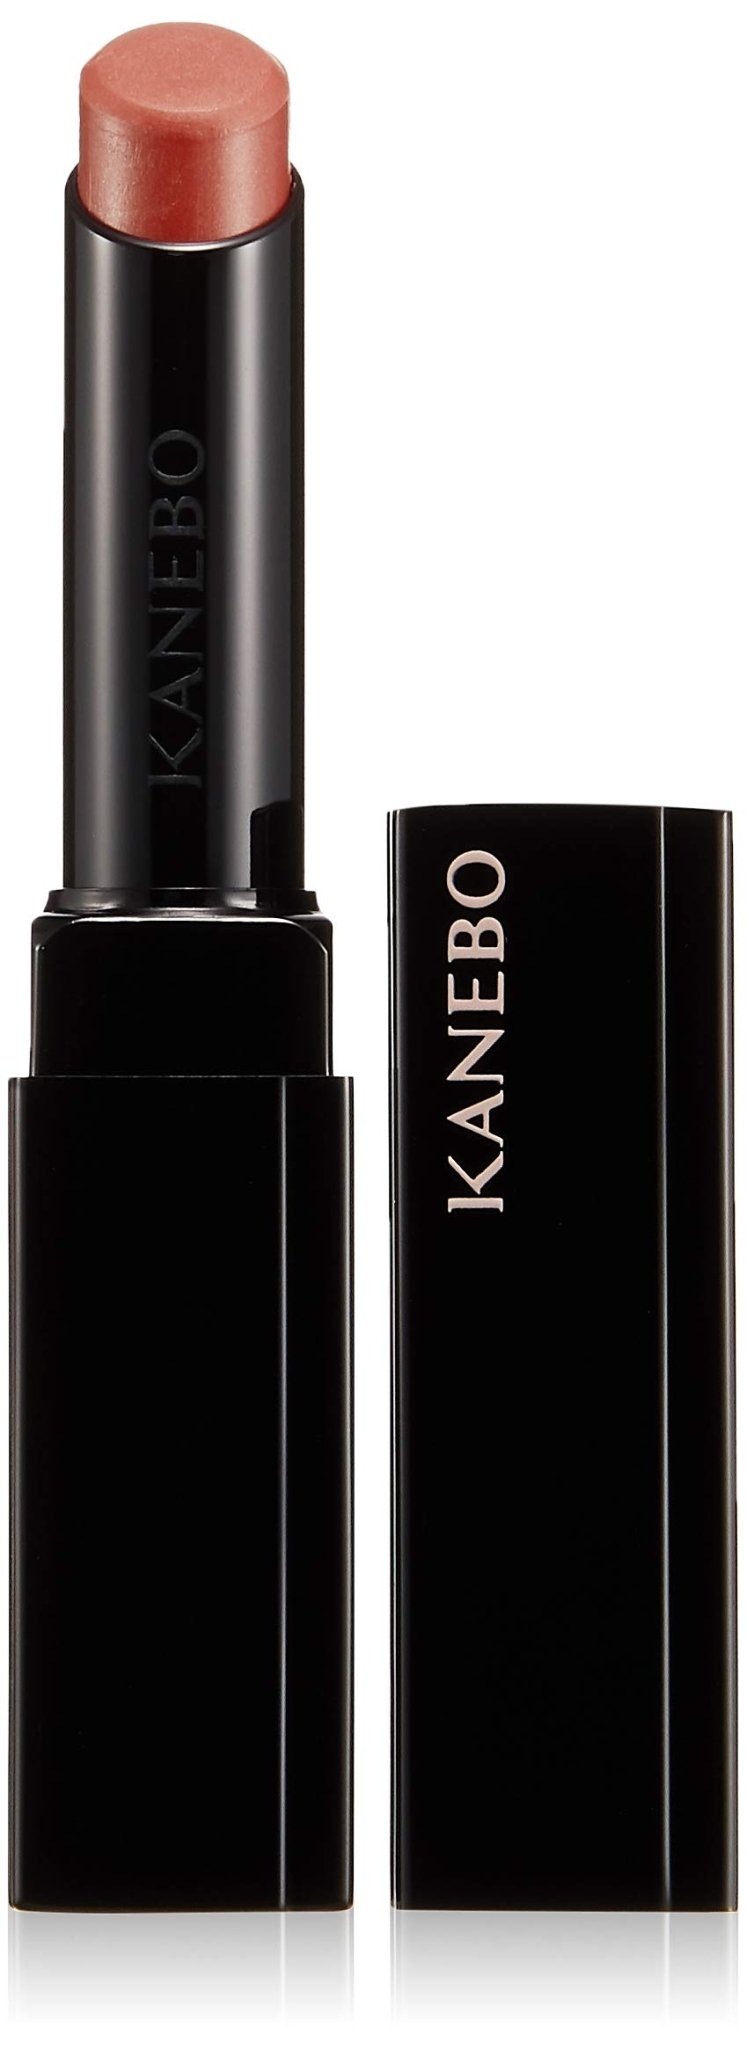 Kanebo Wearing Keep Rouge 09 Long - Lasting Burgundy Brown Lipstick